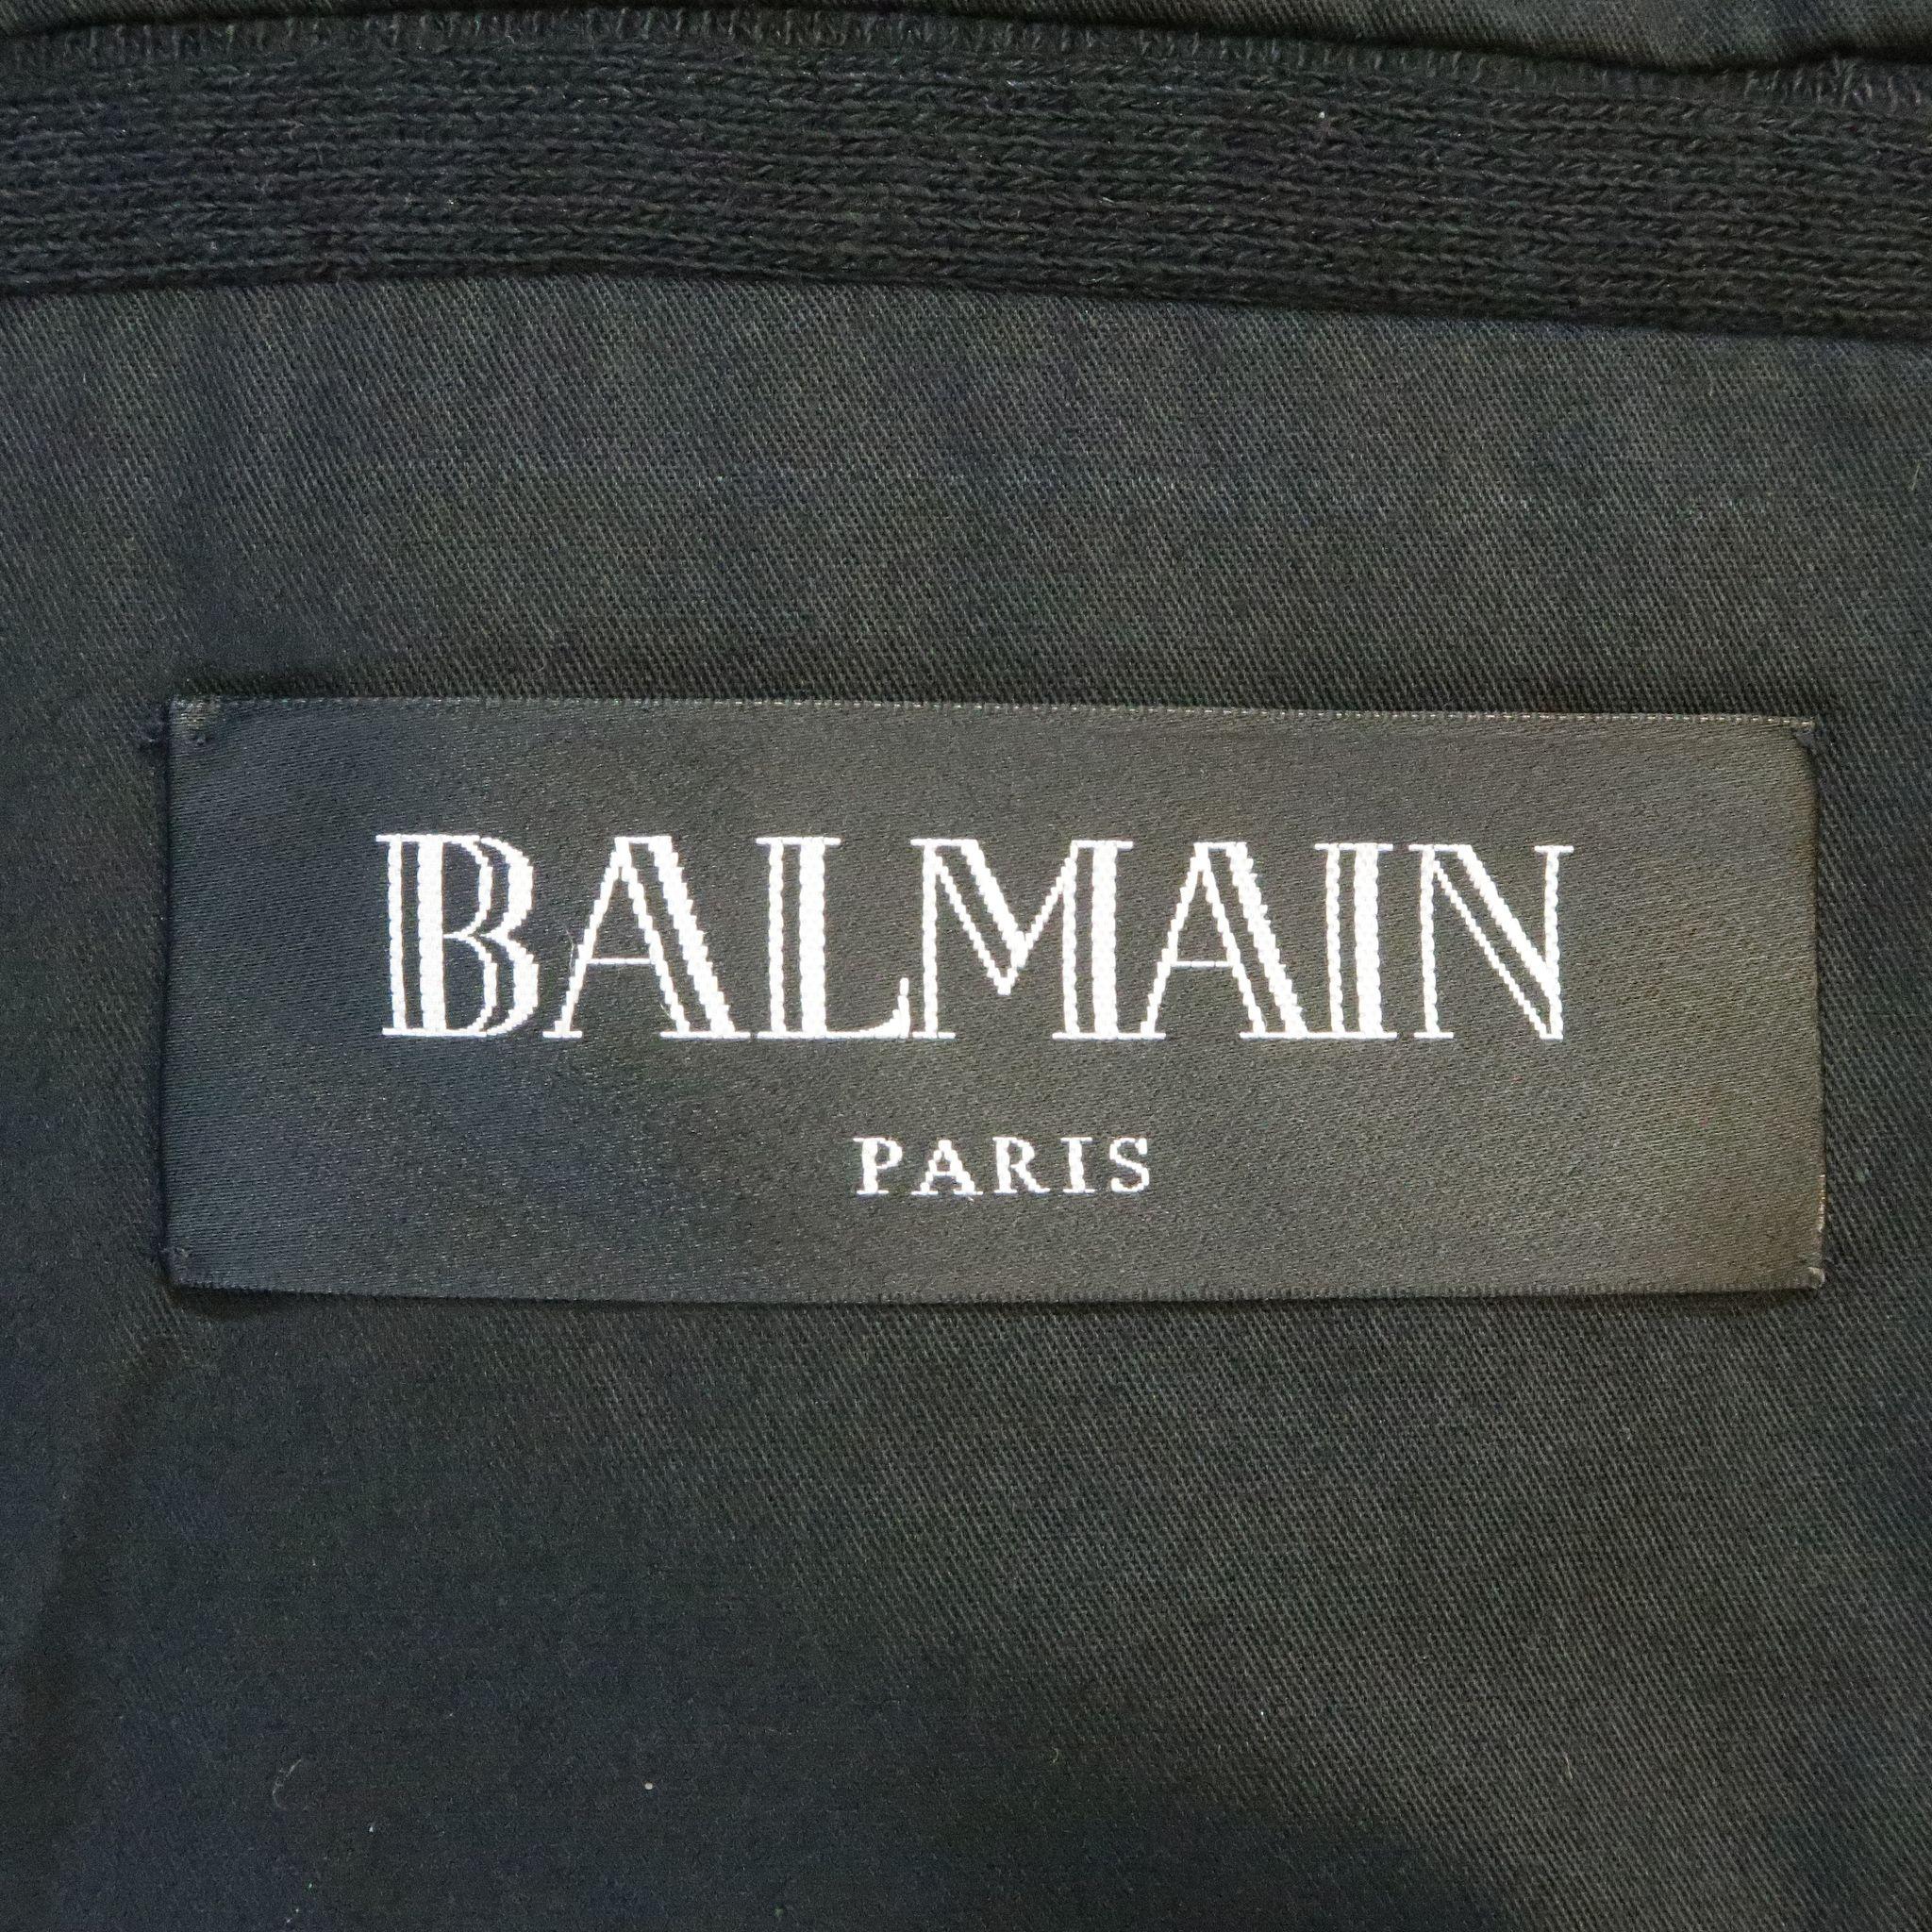 BALMAIN Motorcycle Jacket - Size Large - Men's Black Cotton / Linen  5